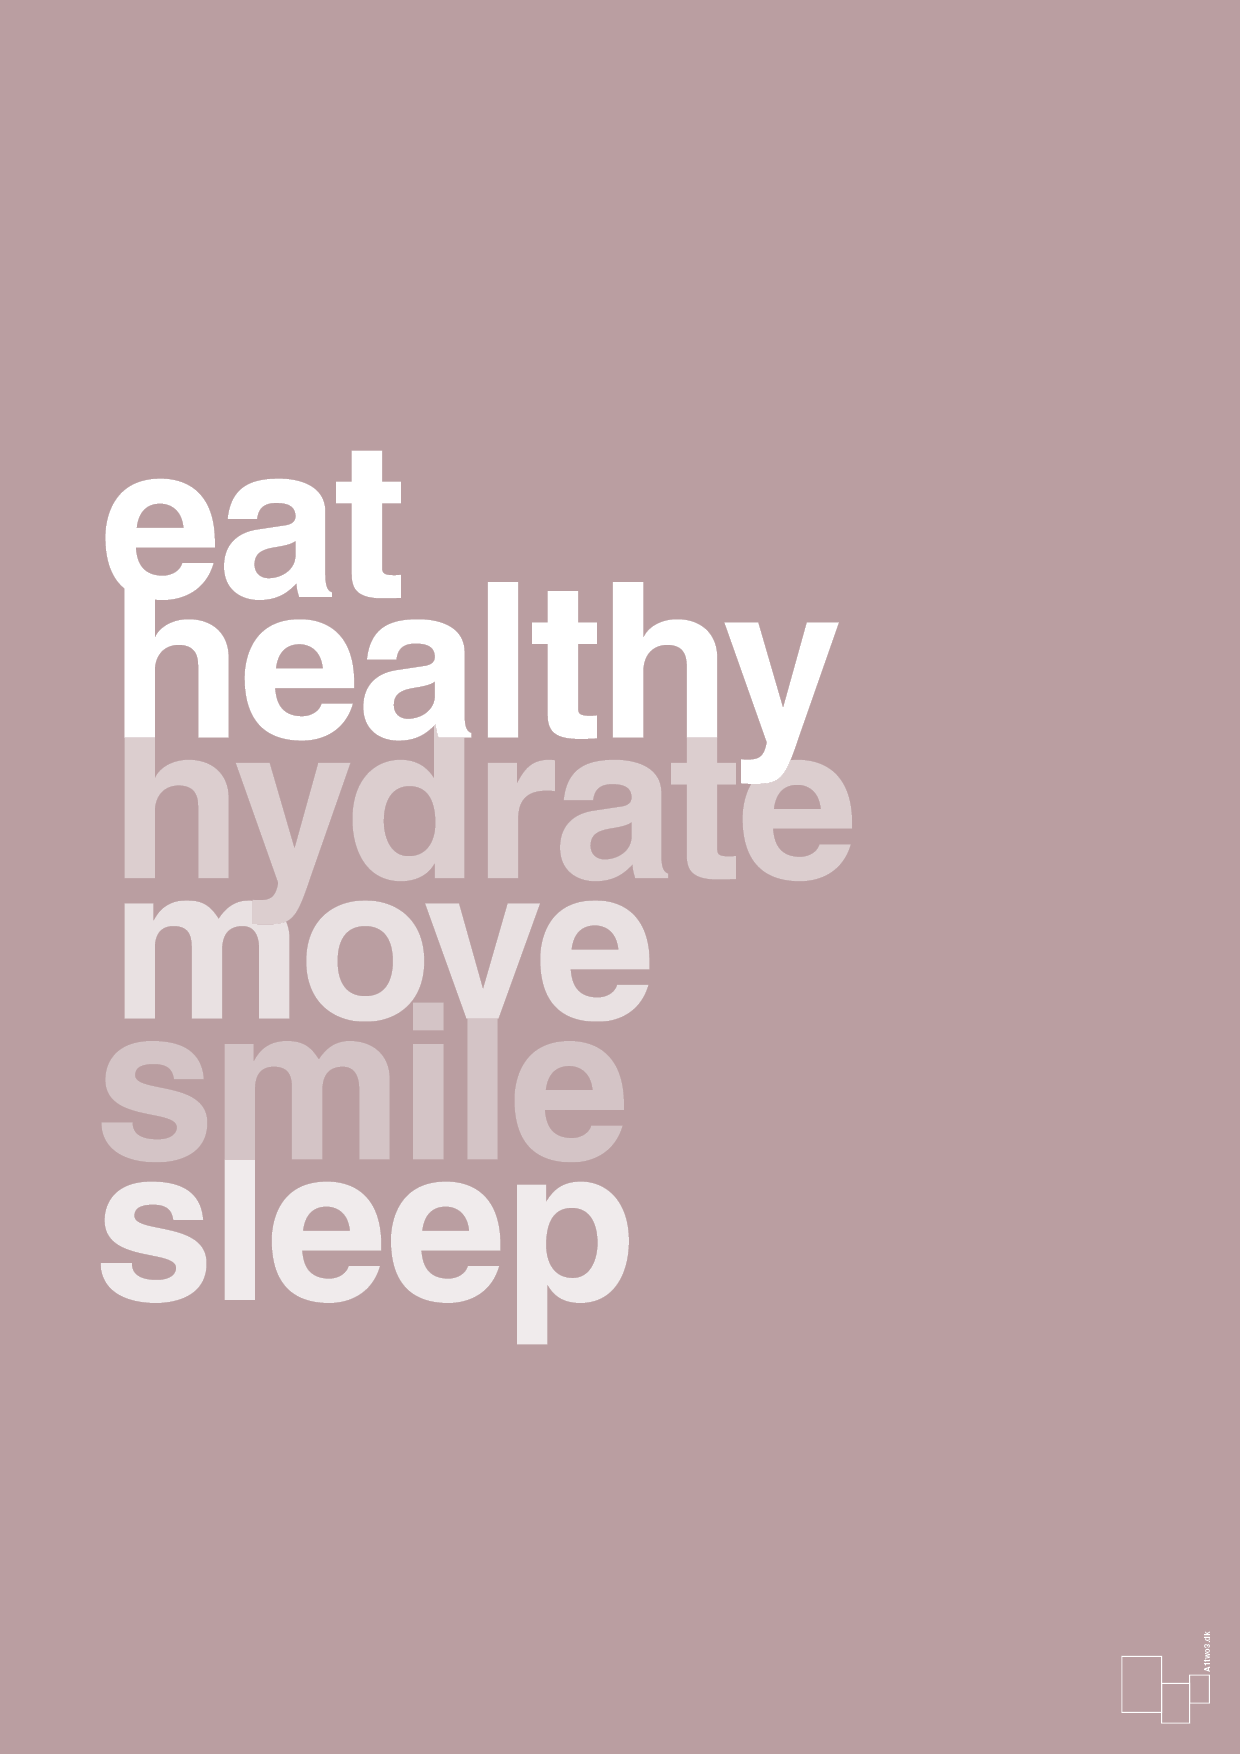 eat healthy hydrate move smile sleep - Plakat med Ordsprog i Light Rose